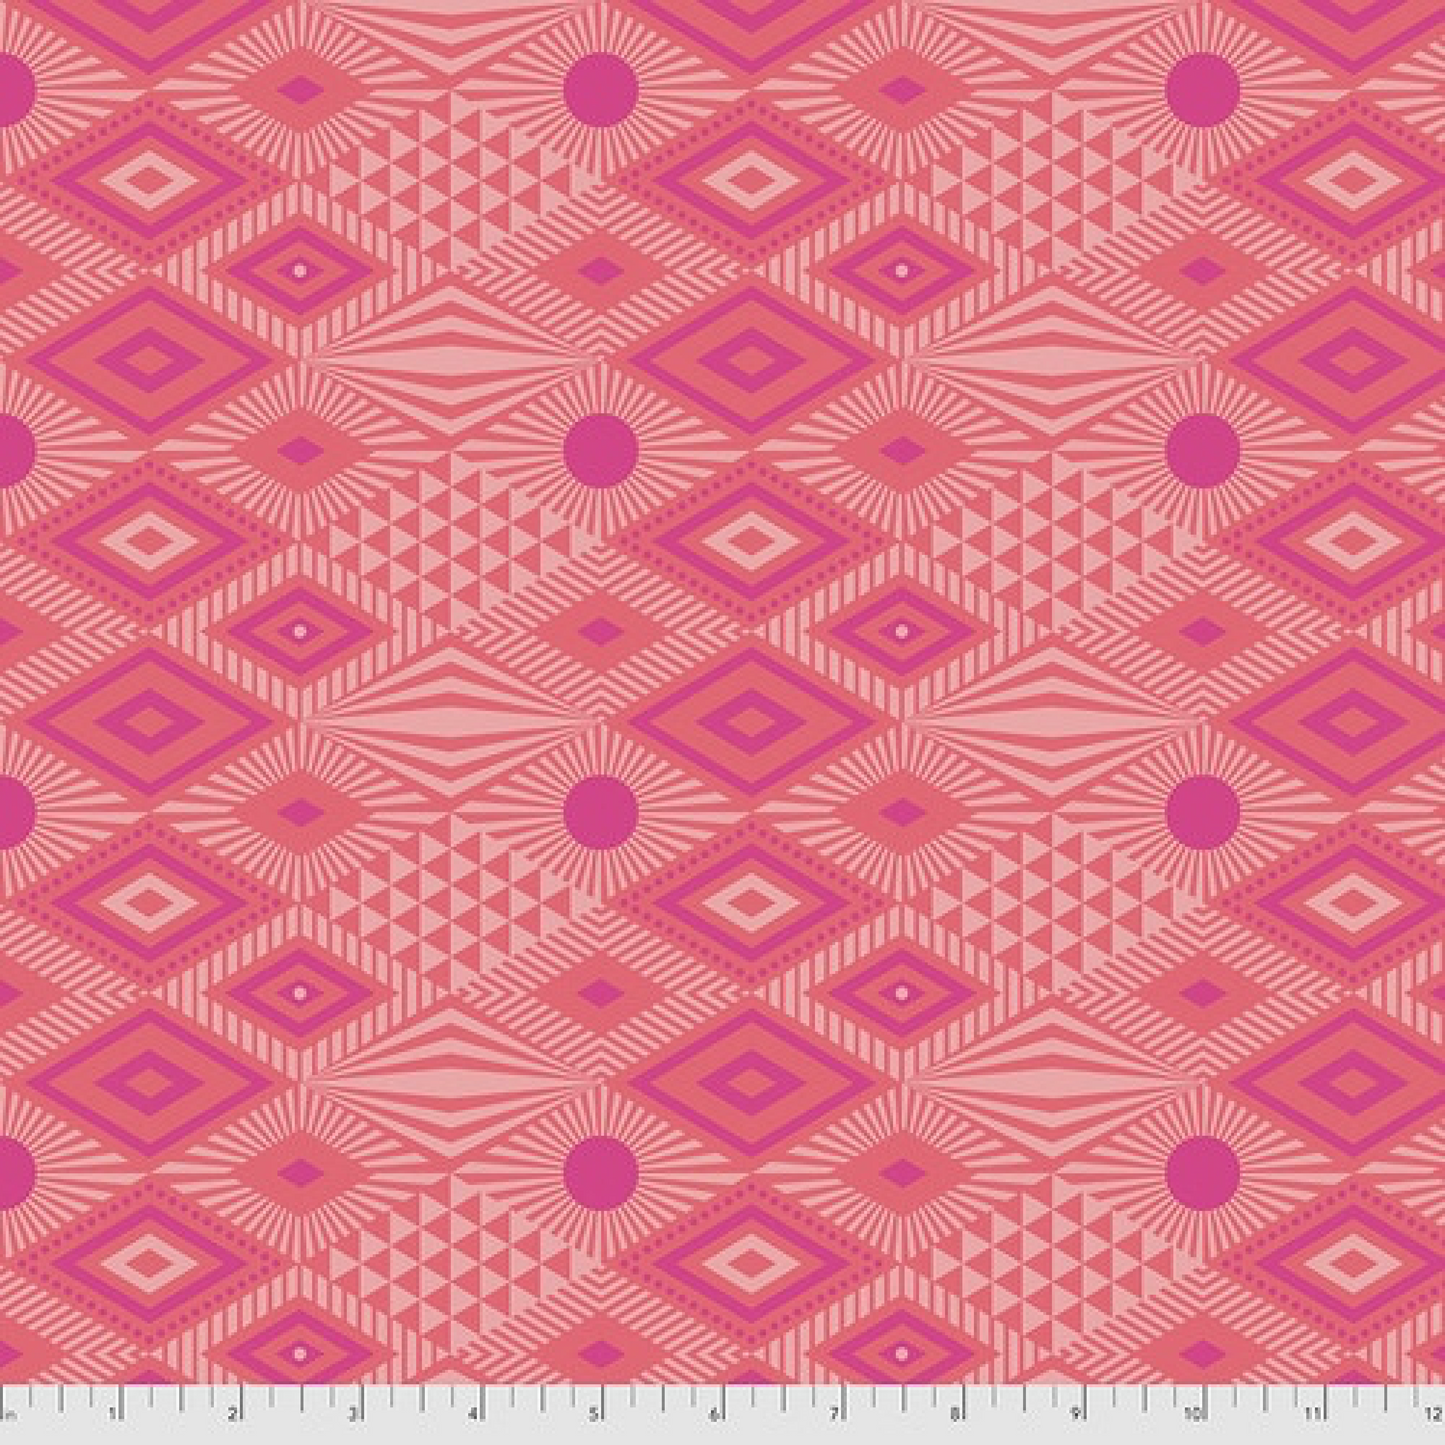 Tula Pink-Daydreamer-Design Roll